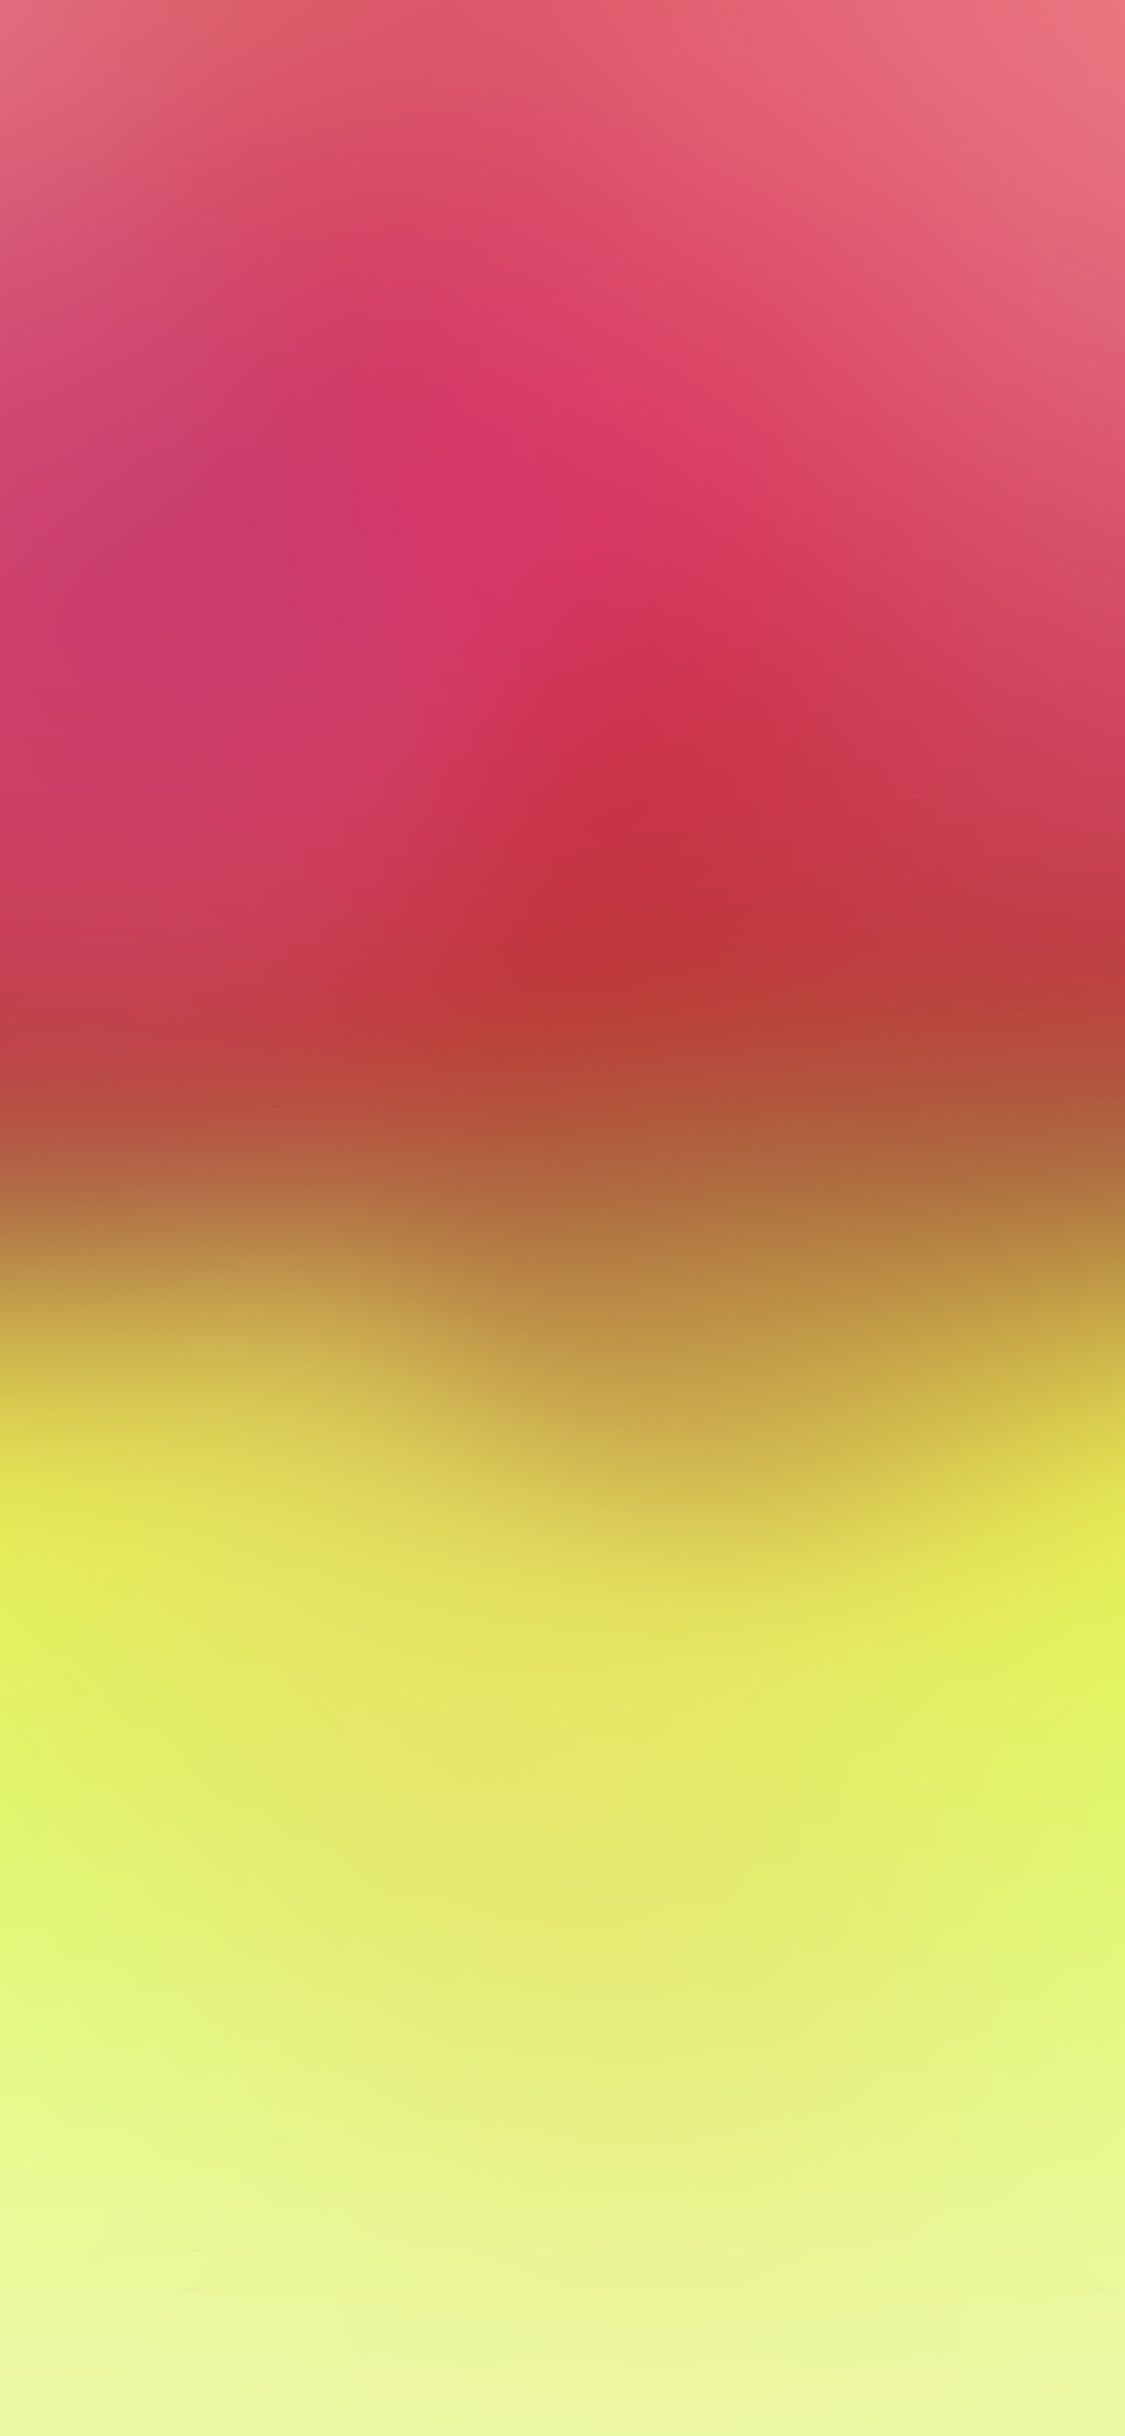 iPhoneXpapers lemonade pink red yellow gradation blur